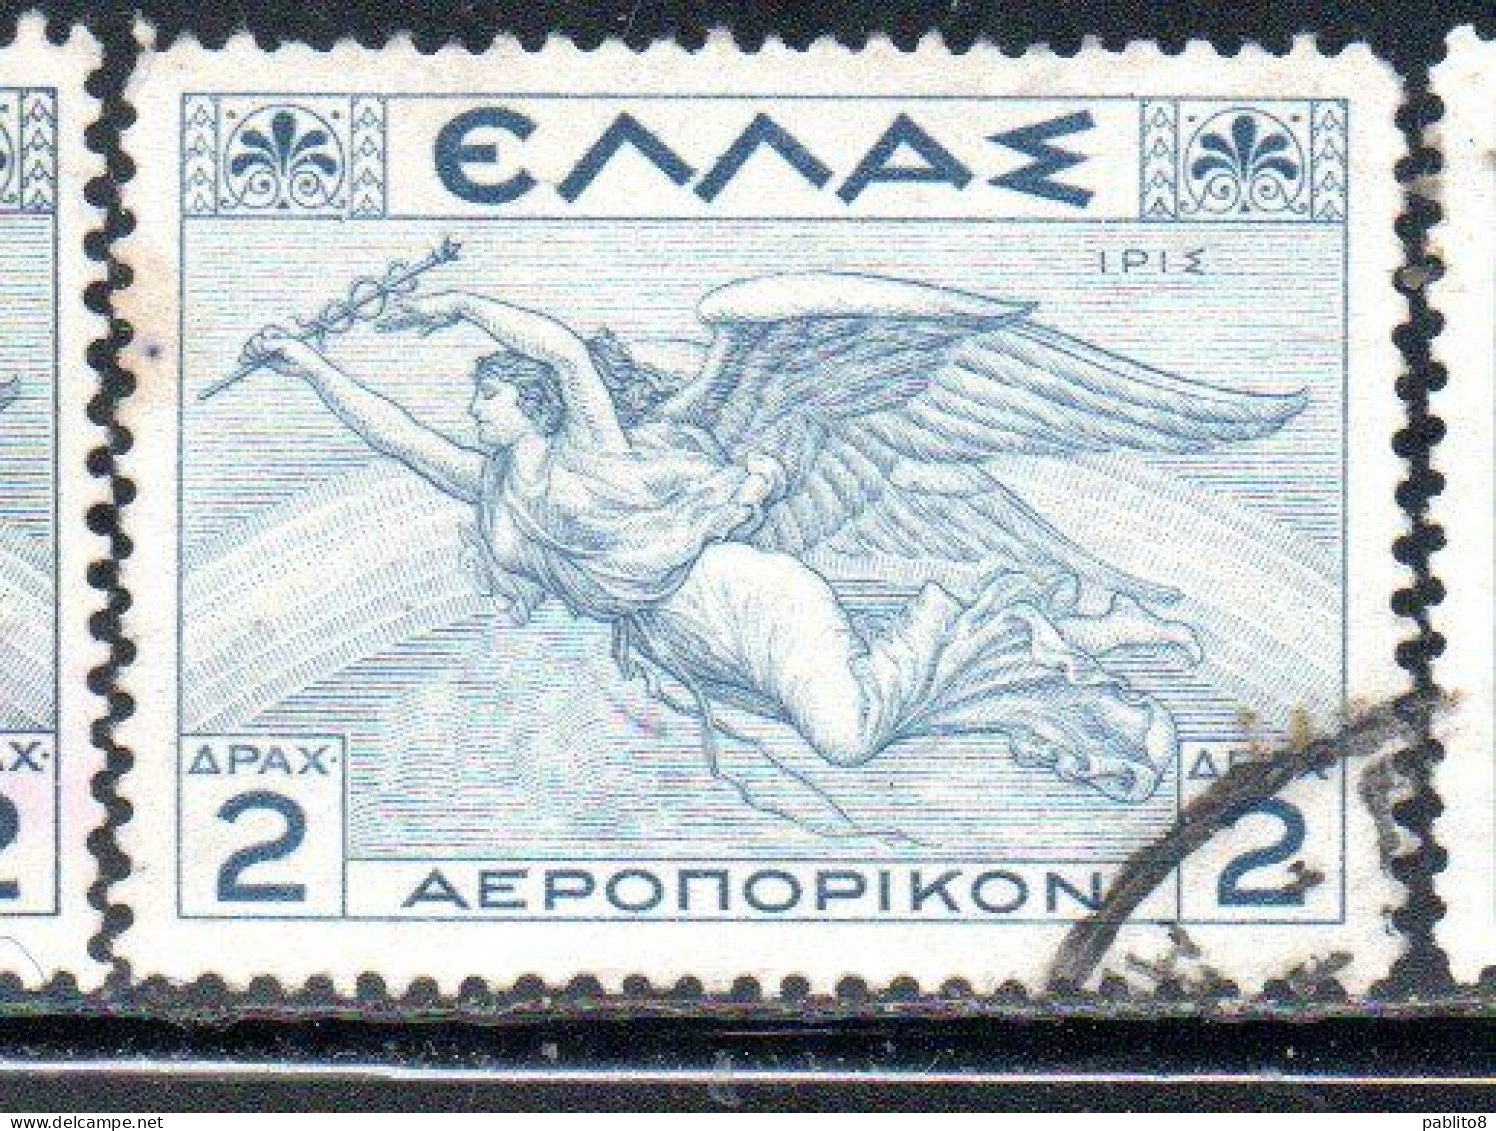 GREECE GRECIA ELLAS 1935 AIR POST MAIL AIRMAIL MYTHOLOGICAL IRIS 2d USED USATO OBLITERE' - Gebraucht